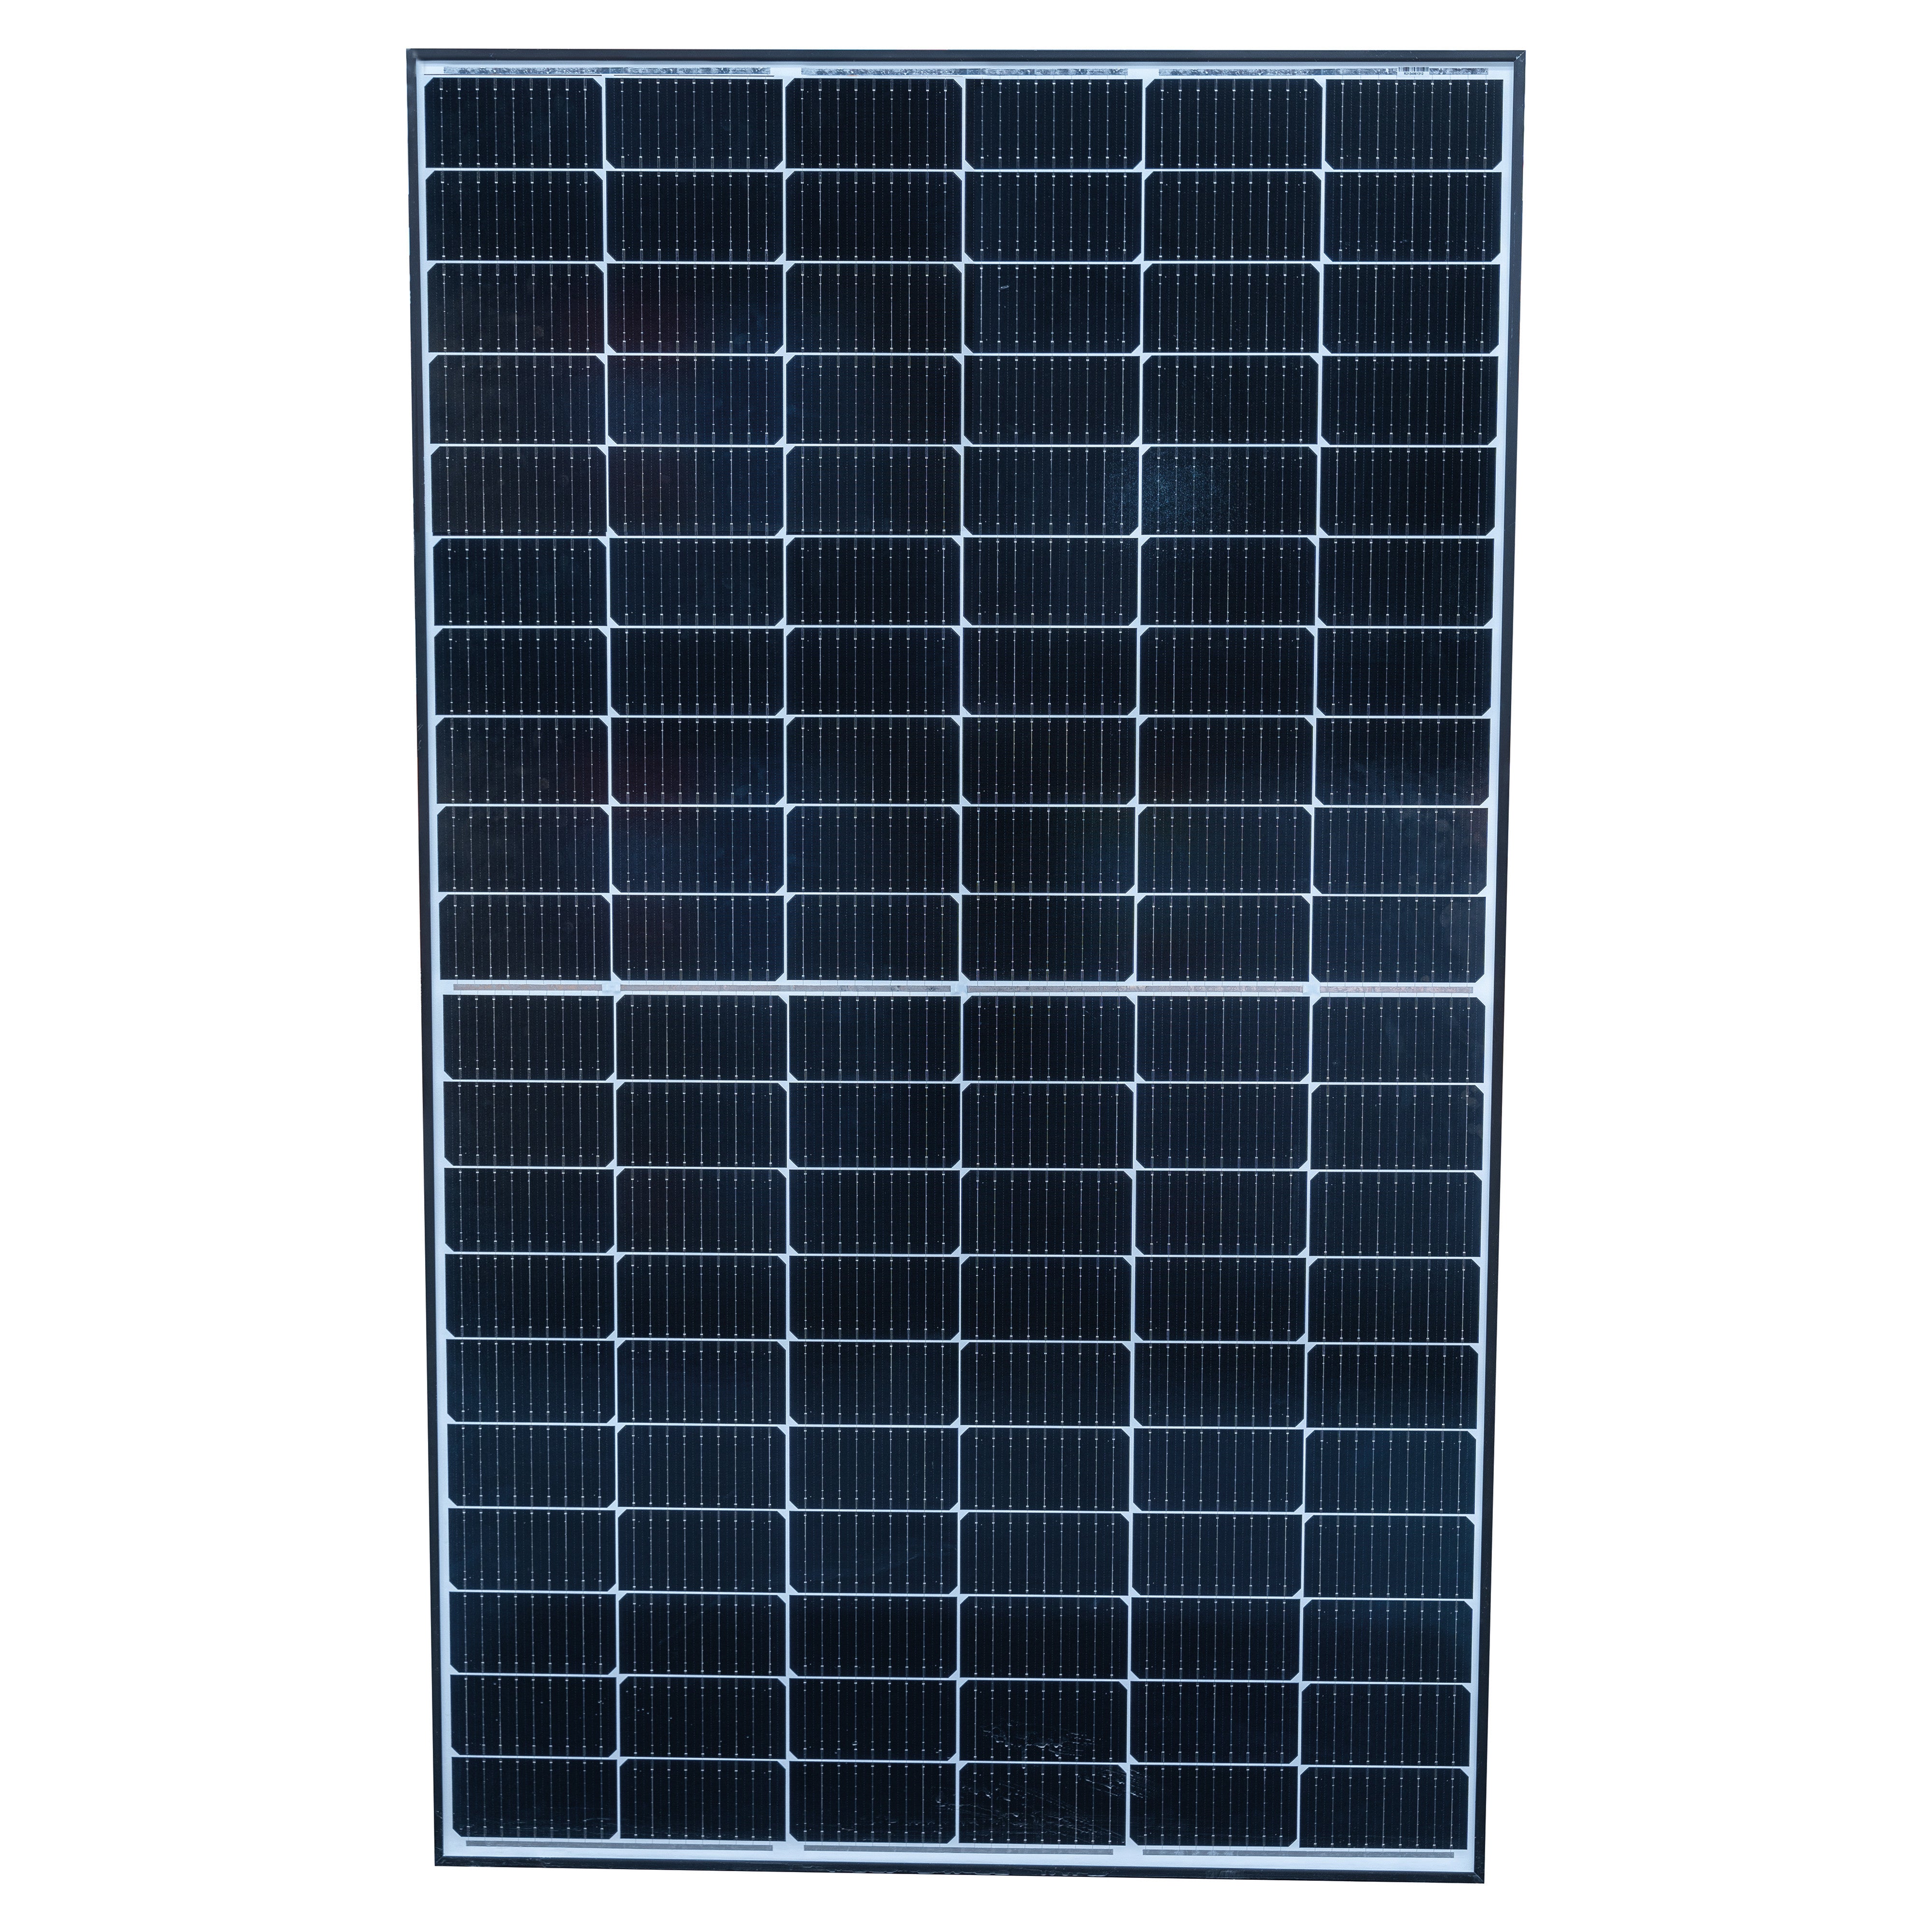 TECNOMAT Photovoltaic systems